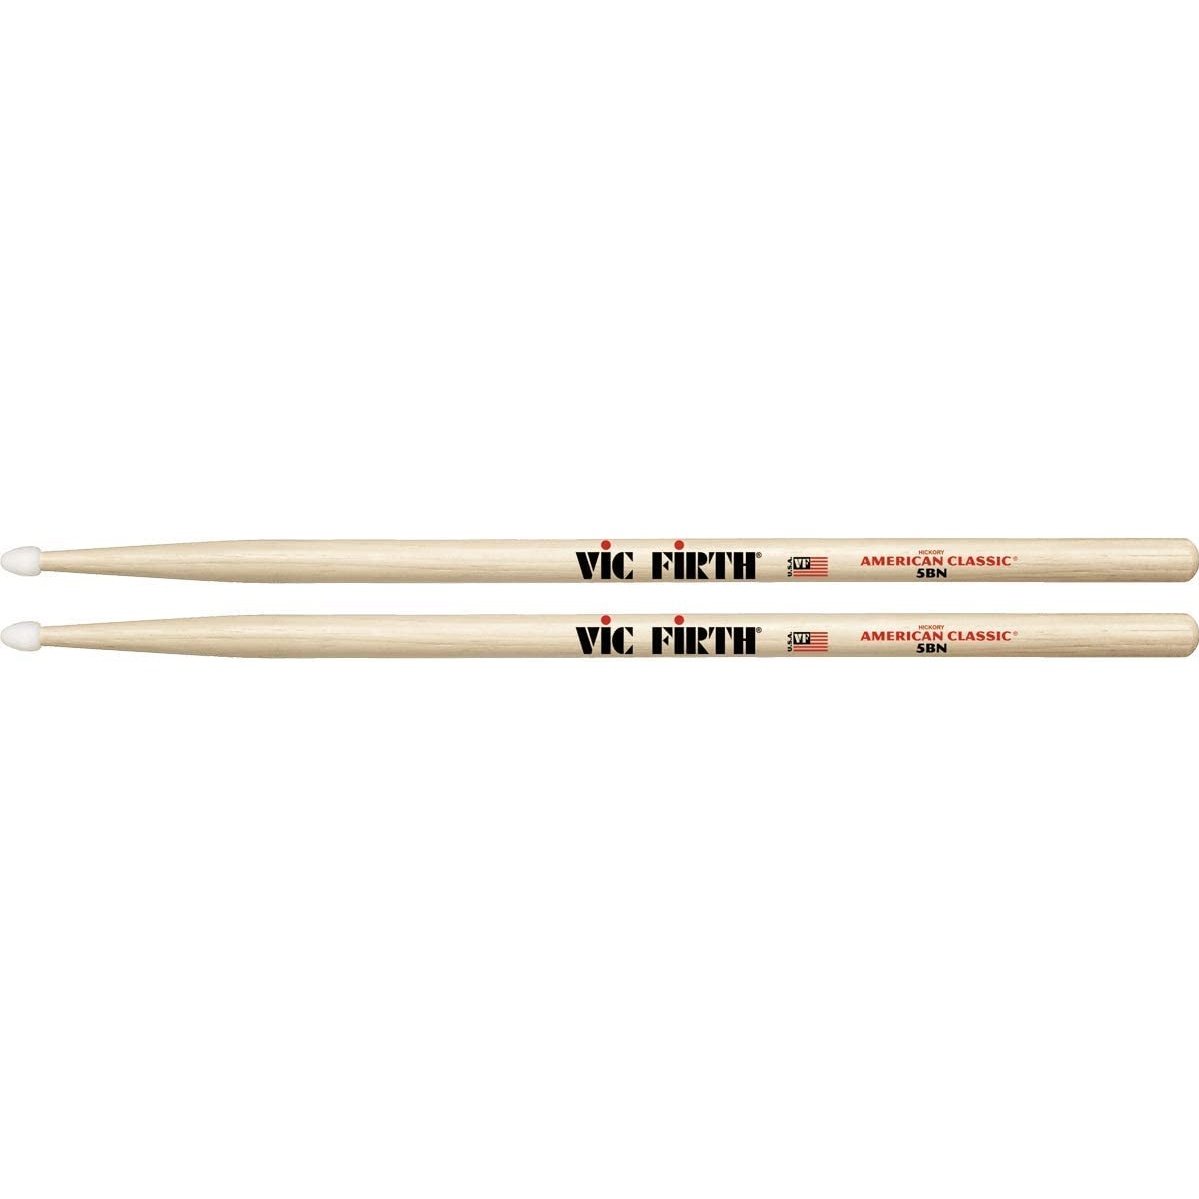 ☆Buy Vic Firth 5BN Drum Sticks, Nylon Tip - 5BN Online at Empire Music Co.